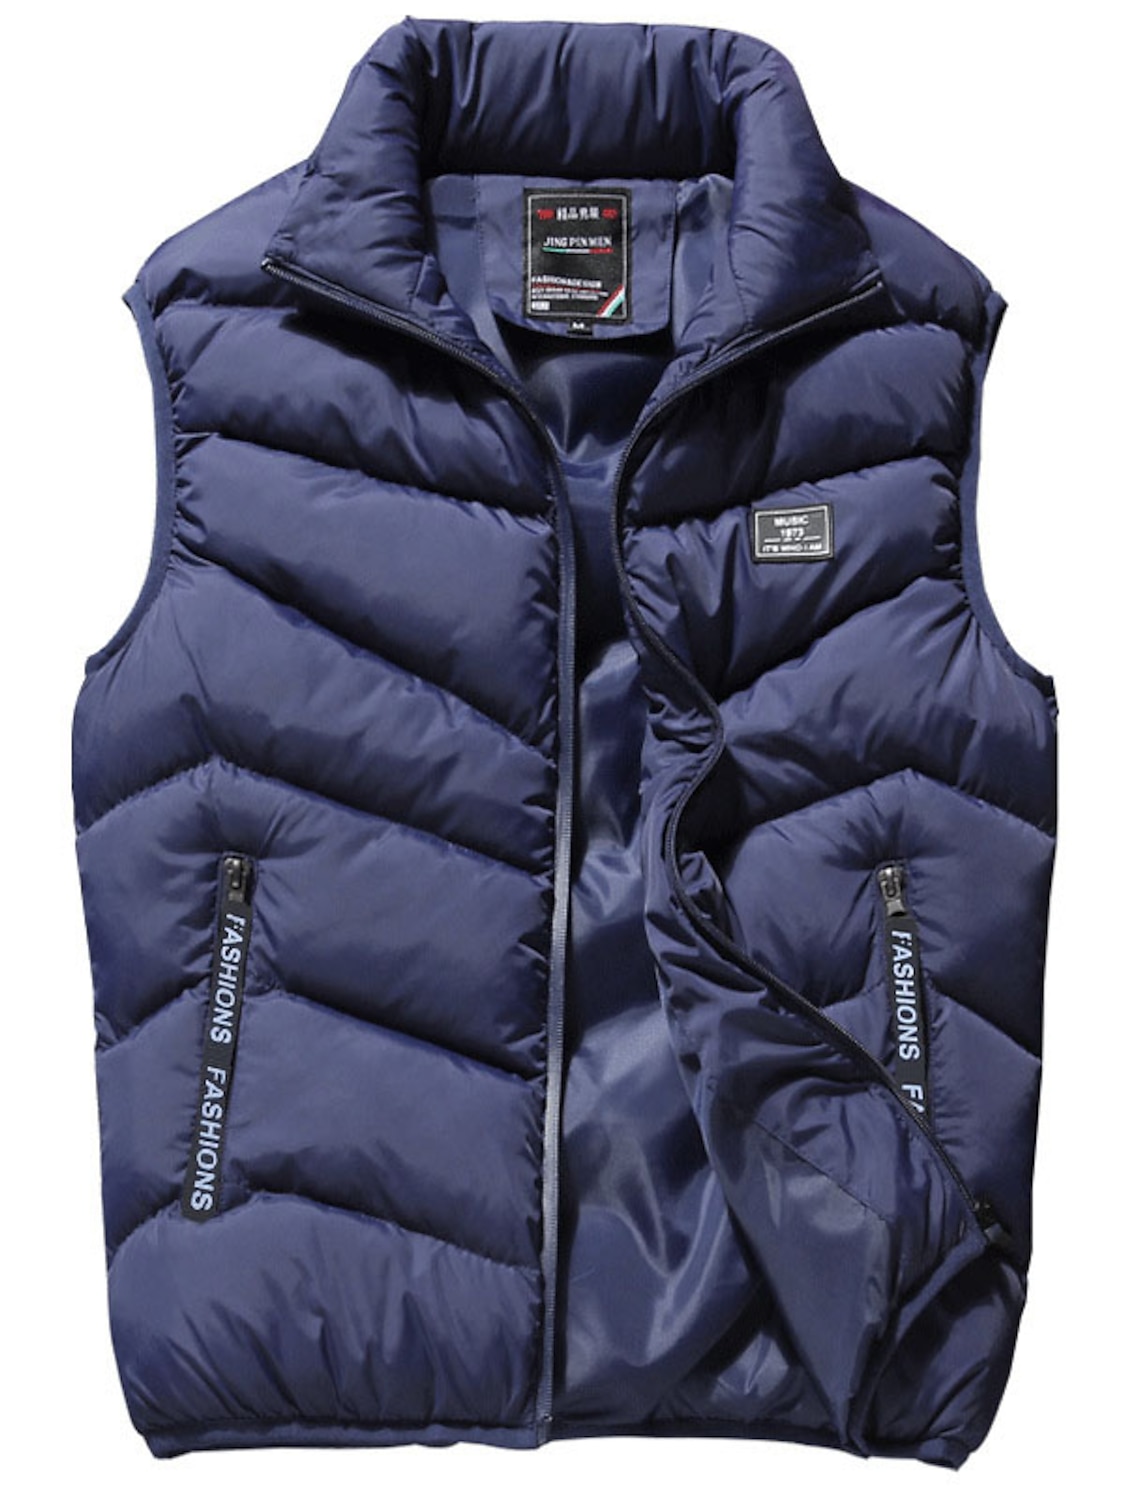 Kstare Mens Vest Jacket Winter Warm Waistcoat Lightweight Zipper Sleeveless Water-Resistant Packable Puffer Down Coat